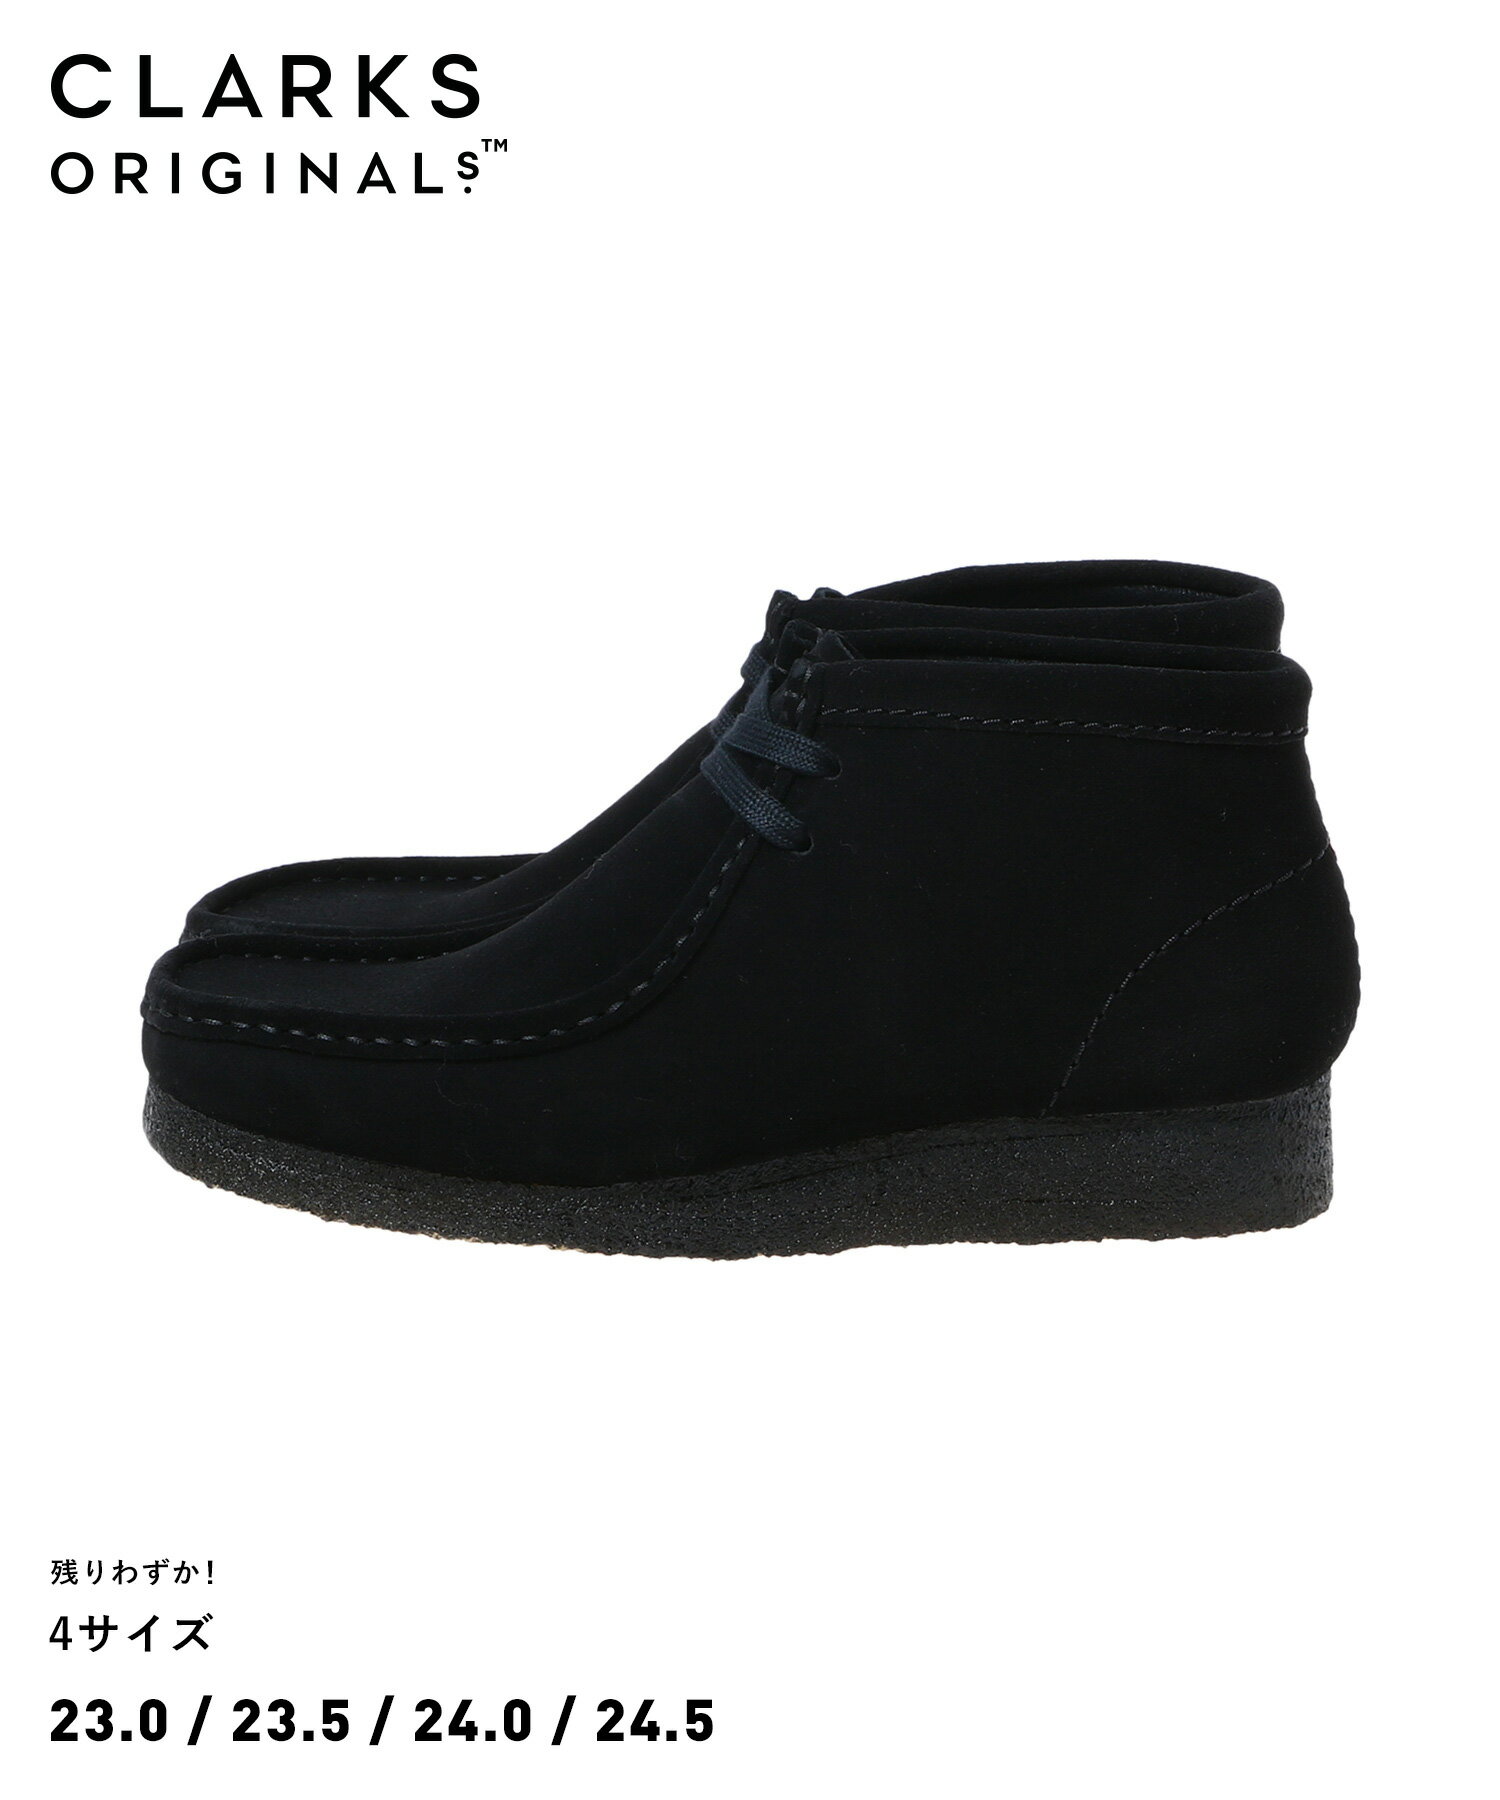 40％OFF Clarks Wallabee Boot. Black Suede(26155521)正規品 レディース ウィメンズ モカシン ブーツ フットウェア 靴 ミドルカット カジュアル シンプル ストリート 定番アイテム オールシーズン ブラック